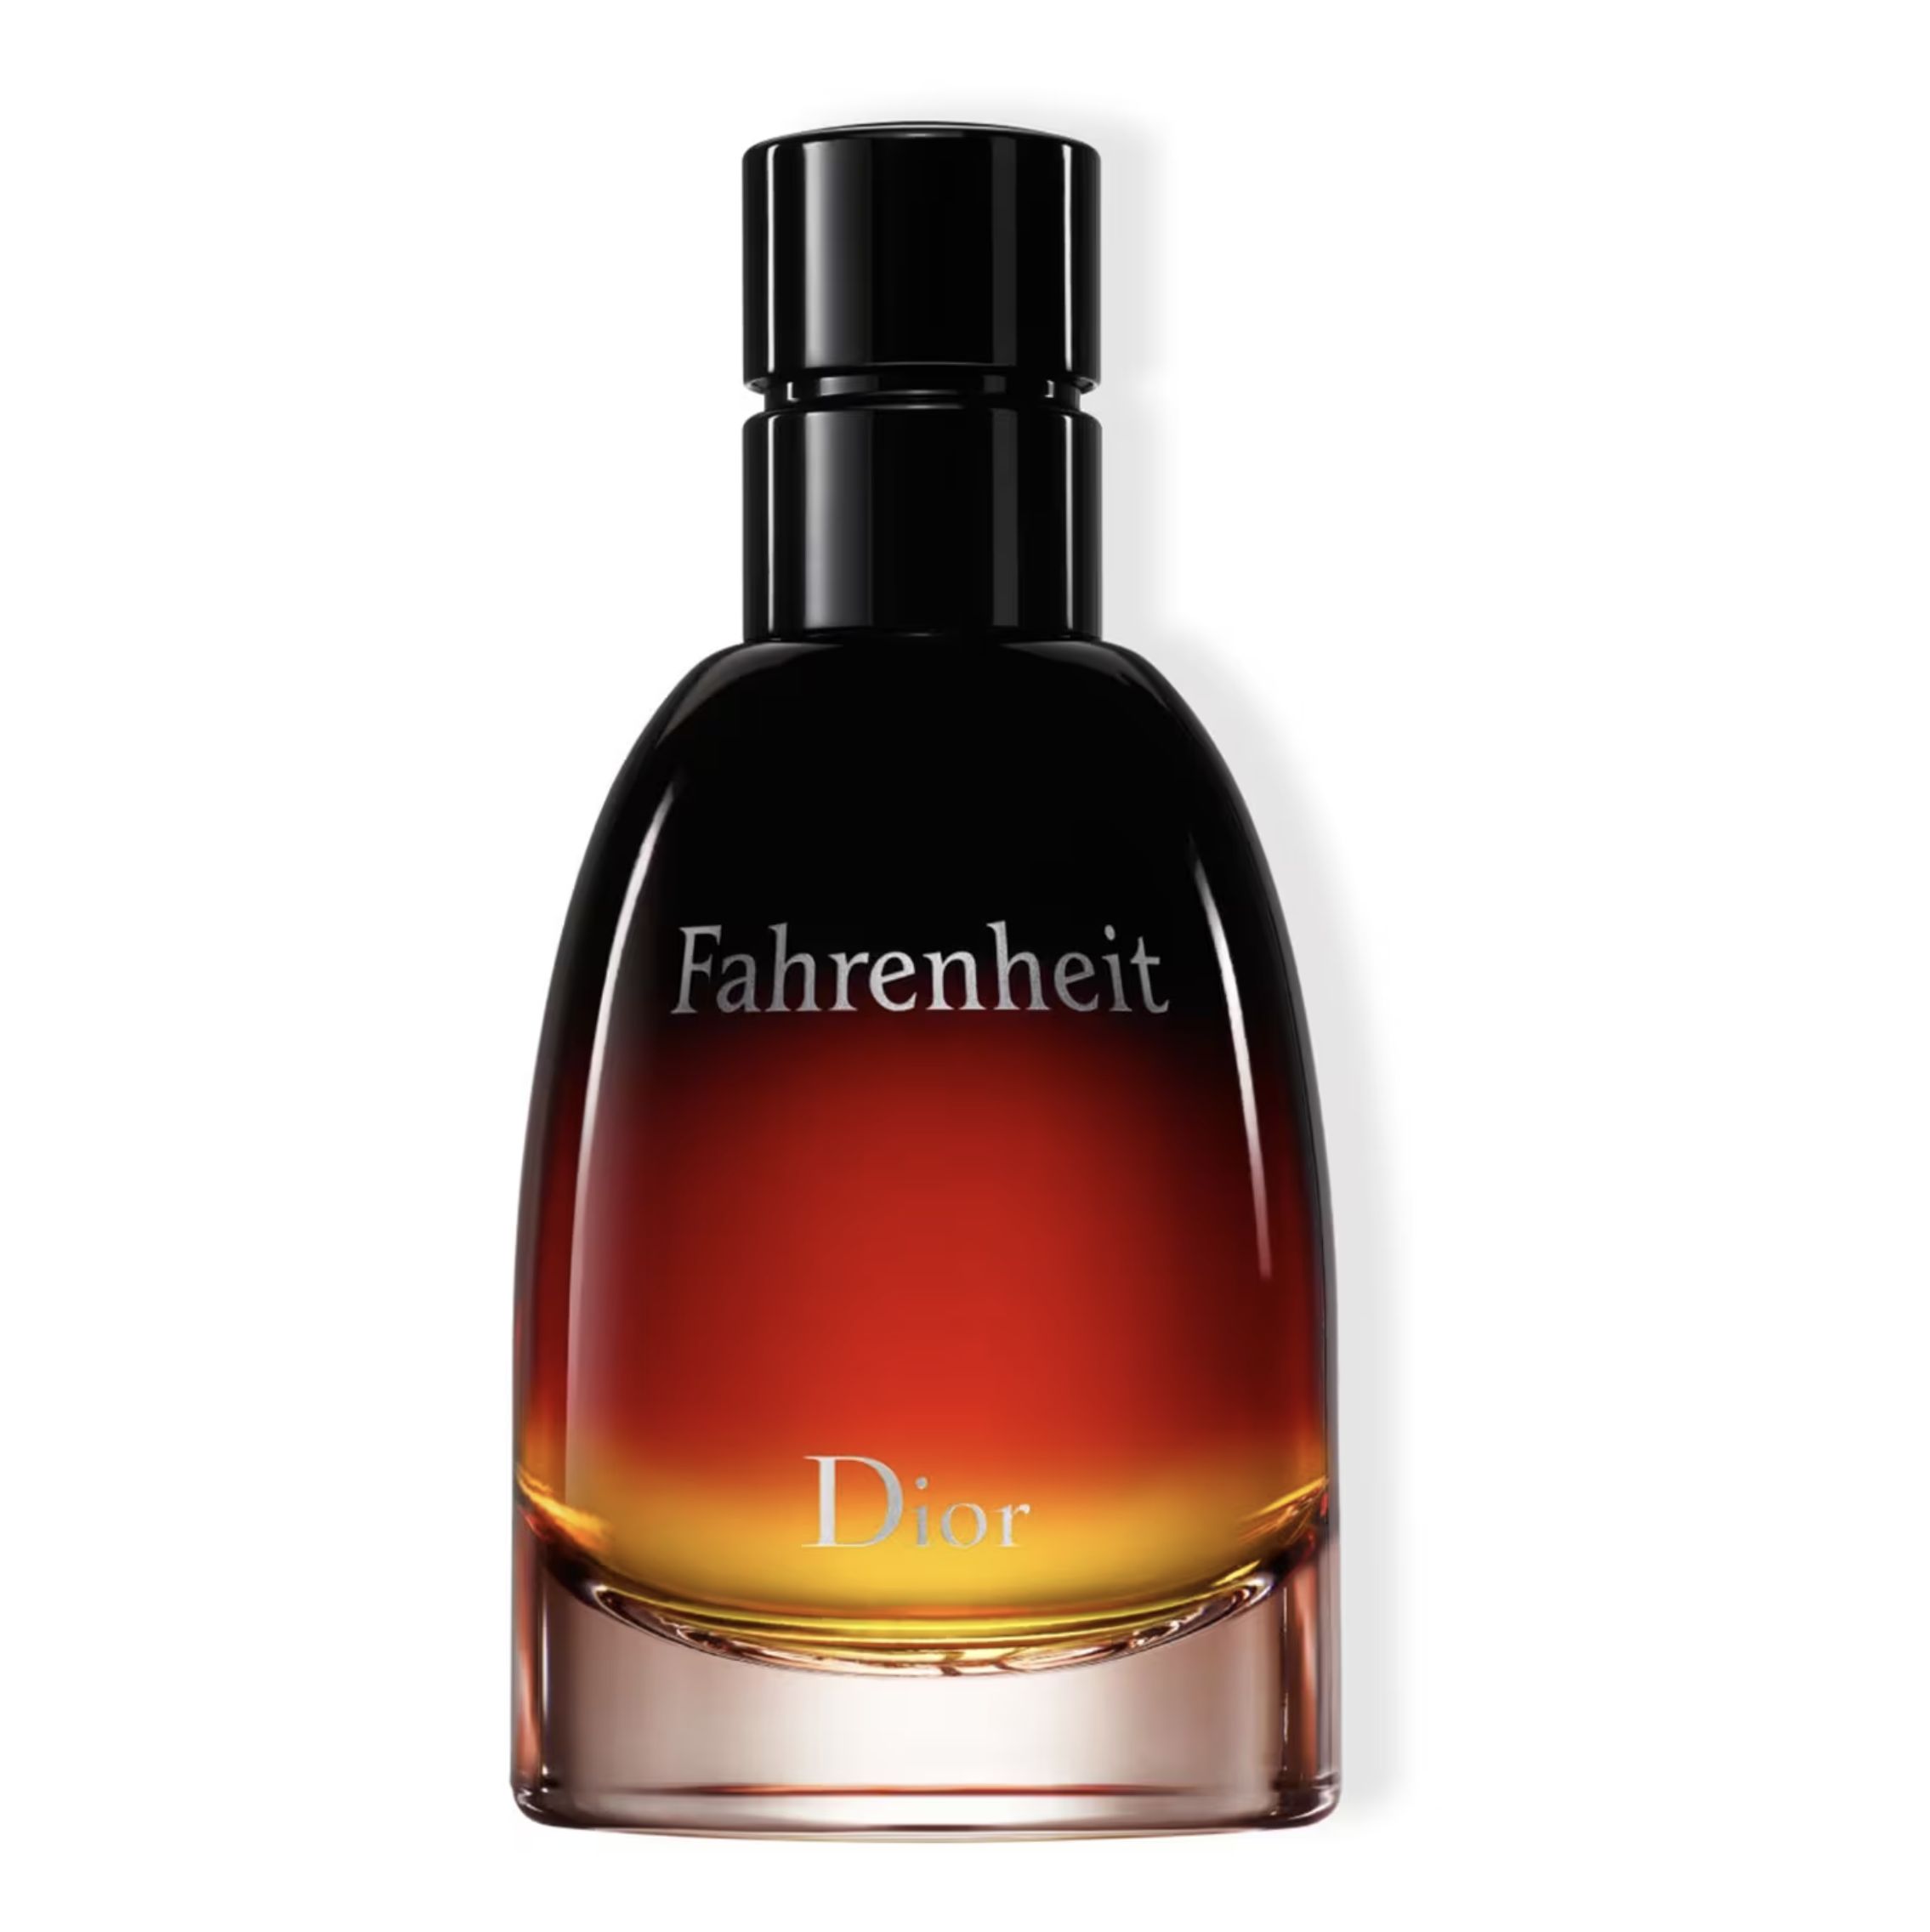 Dior Fahrenheit Parfum 75 ml. Christian Dior Fahrenheit EDP, 75 ml. Fahrenheit le Parfum Dior. Диор фаренгейт Парфюм 75. Dior fahrenheit цены